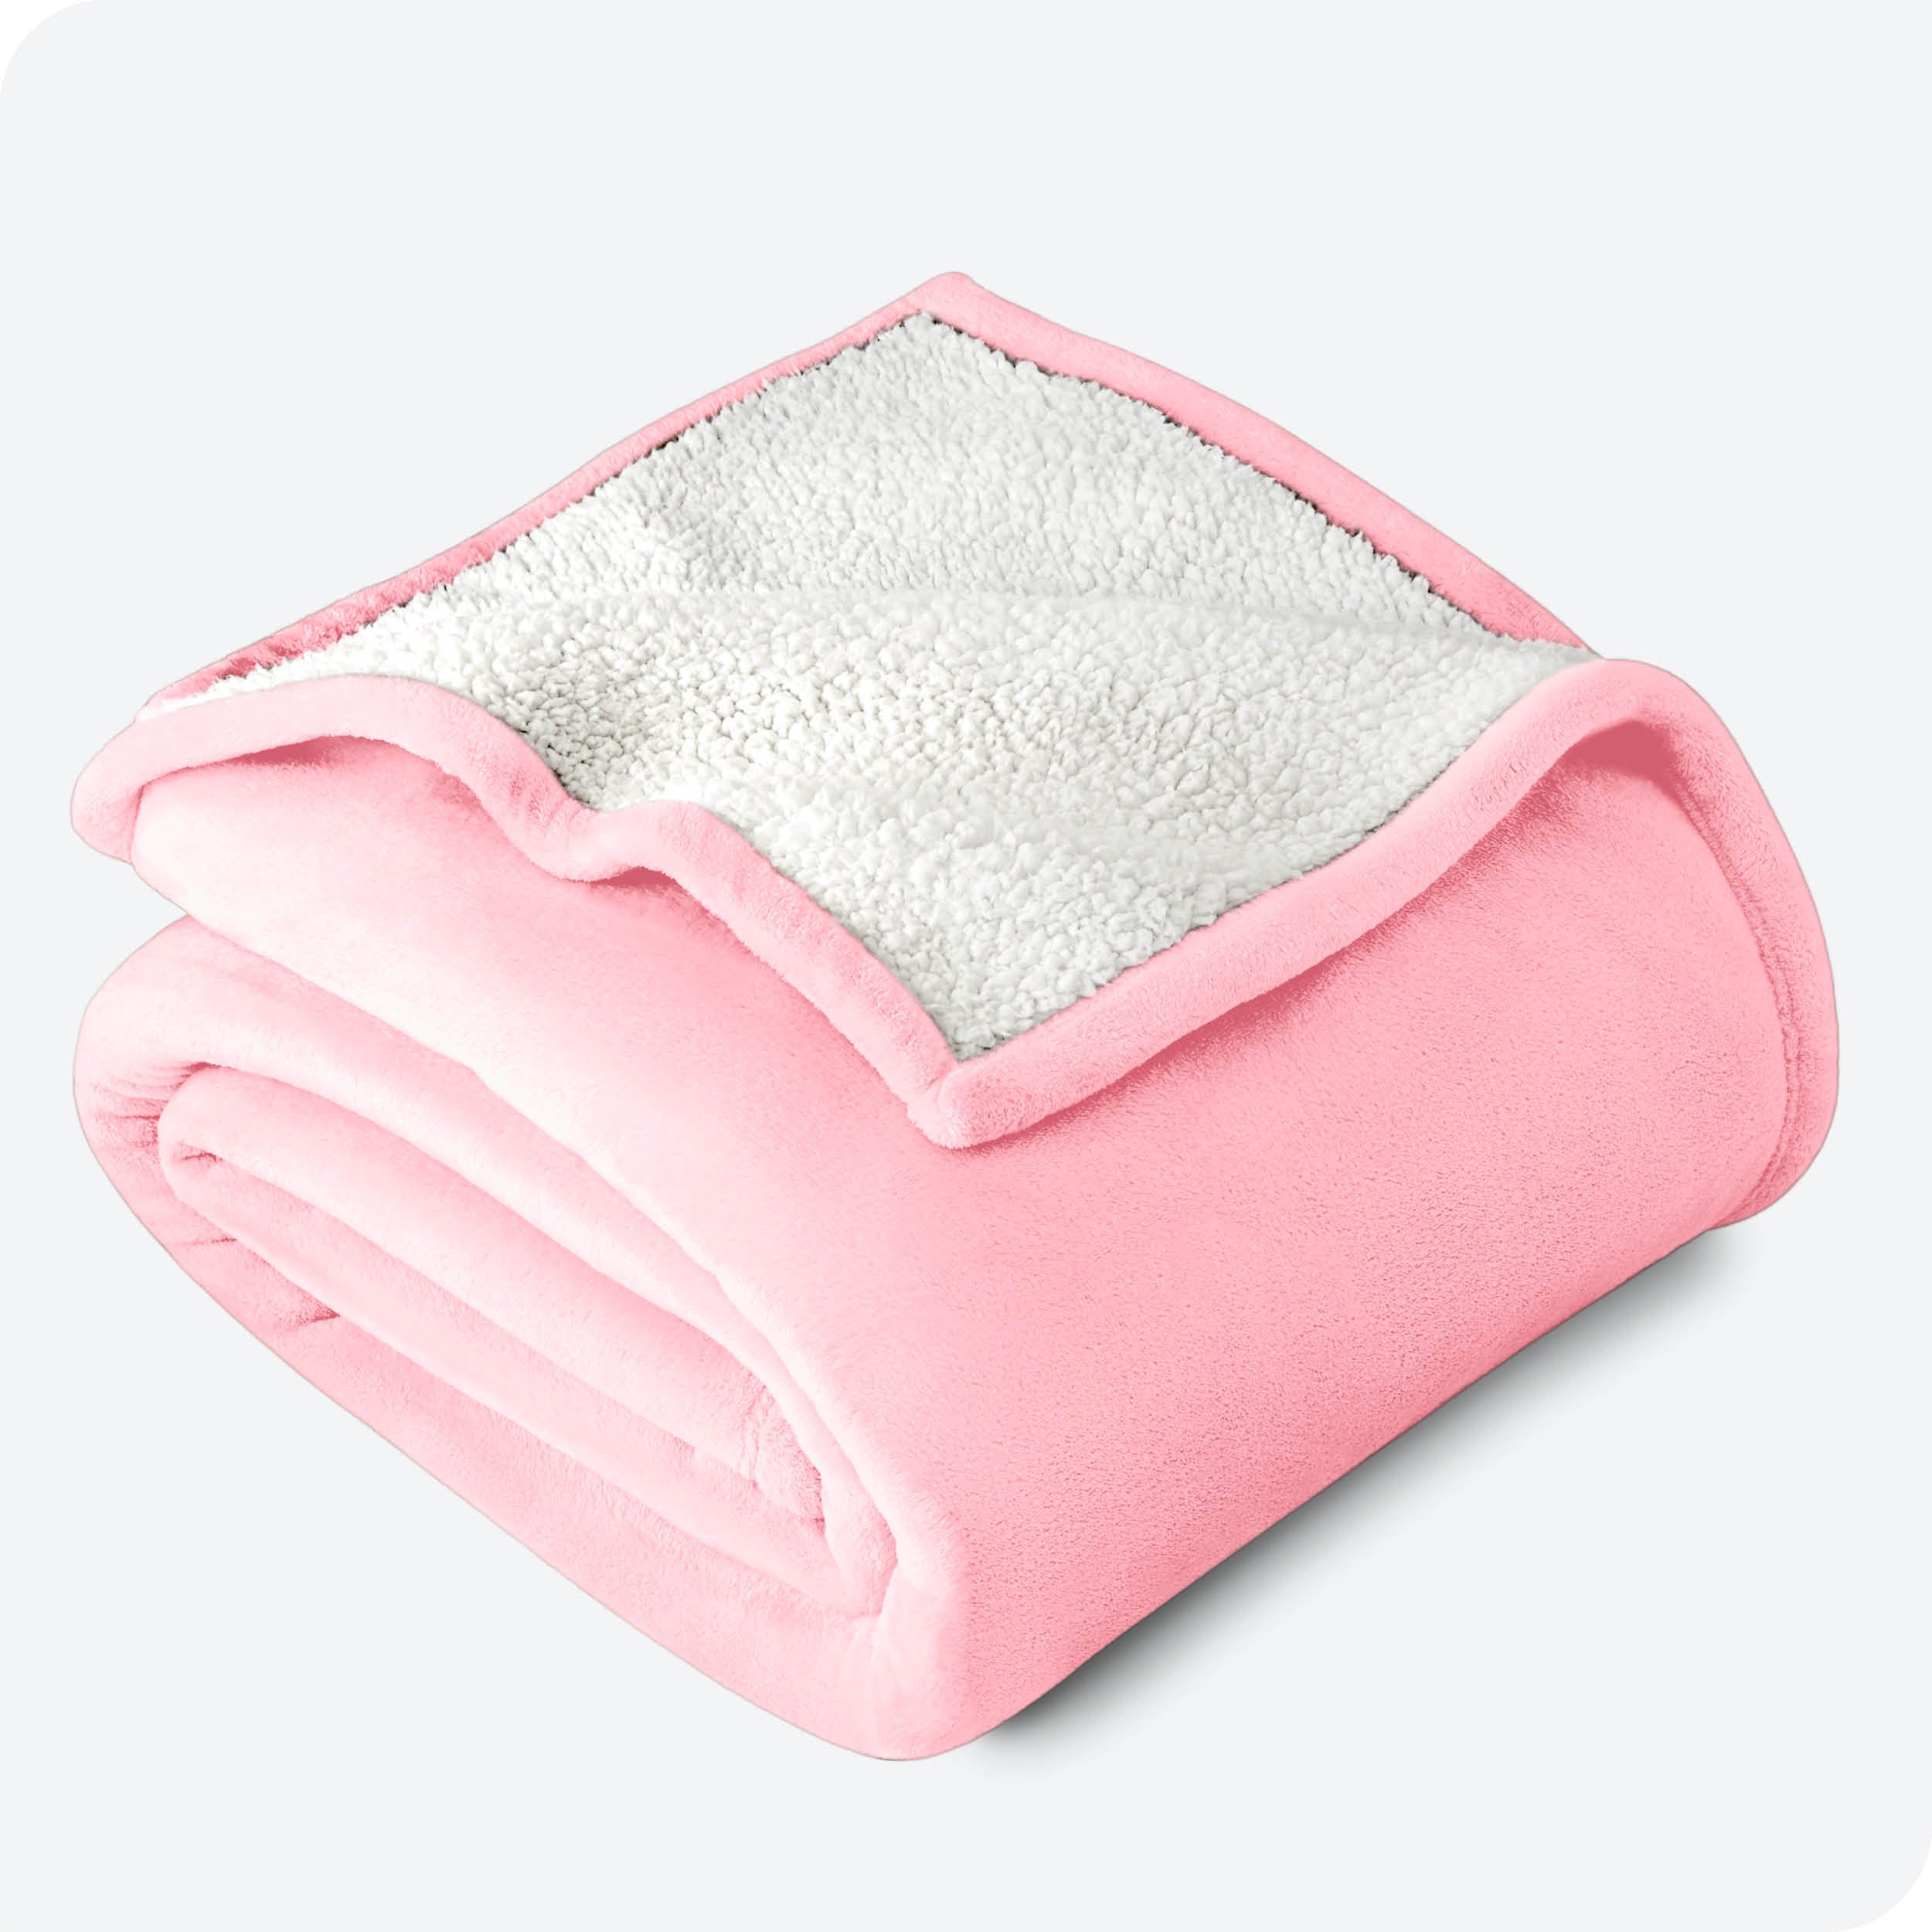 Light Pink Sherpa Blanket folded